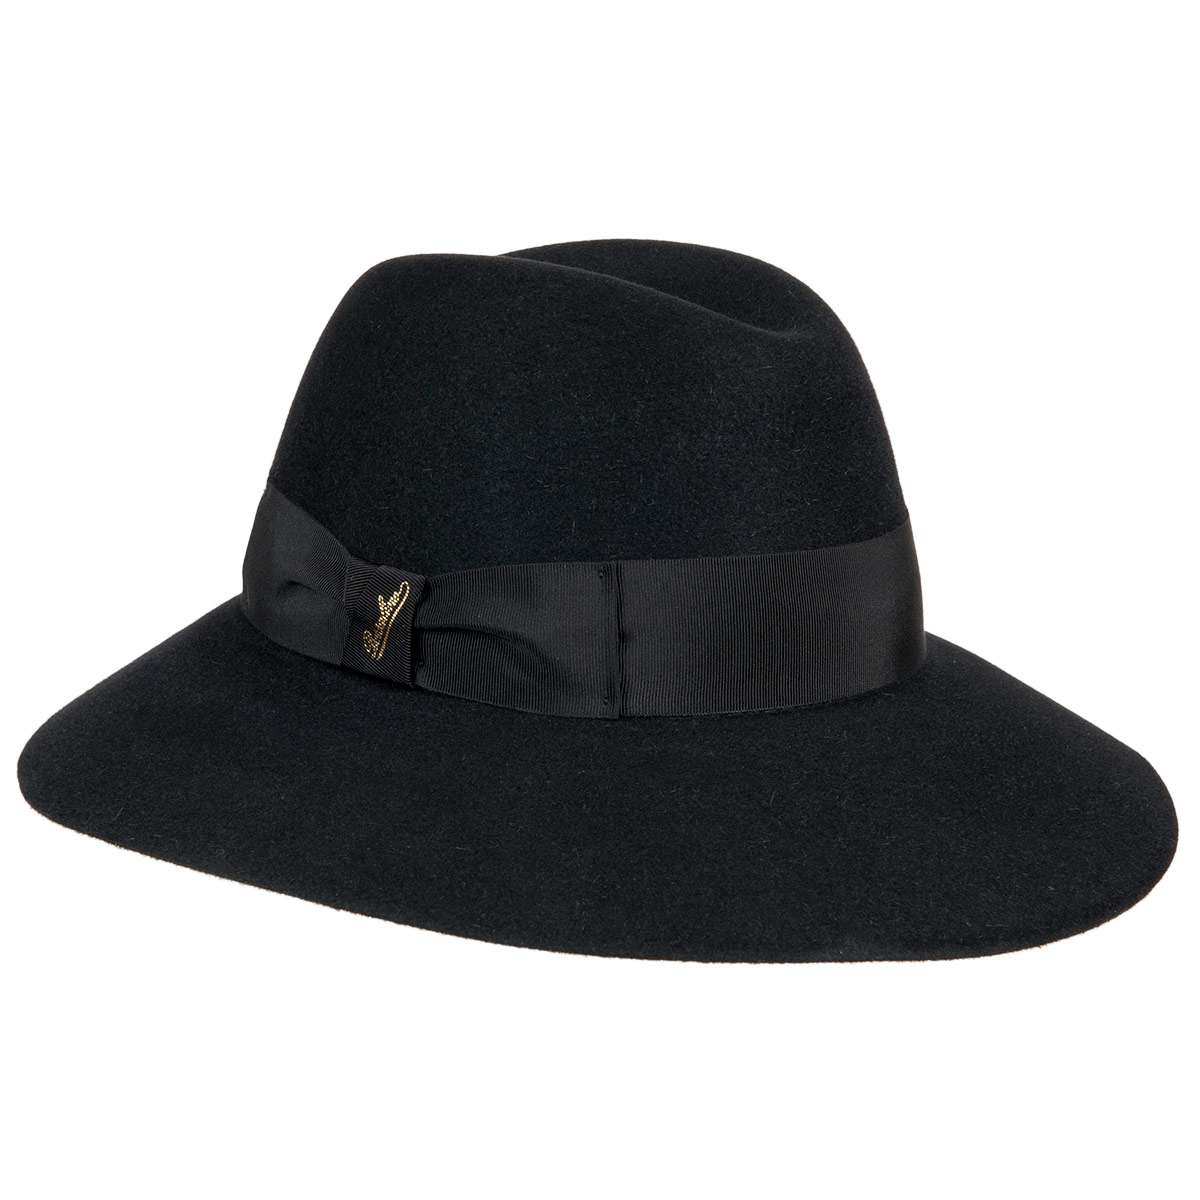 Black Womens Hats Borsalino Hats - Save 26% Borsalino Felt Claudette in Nero 